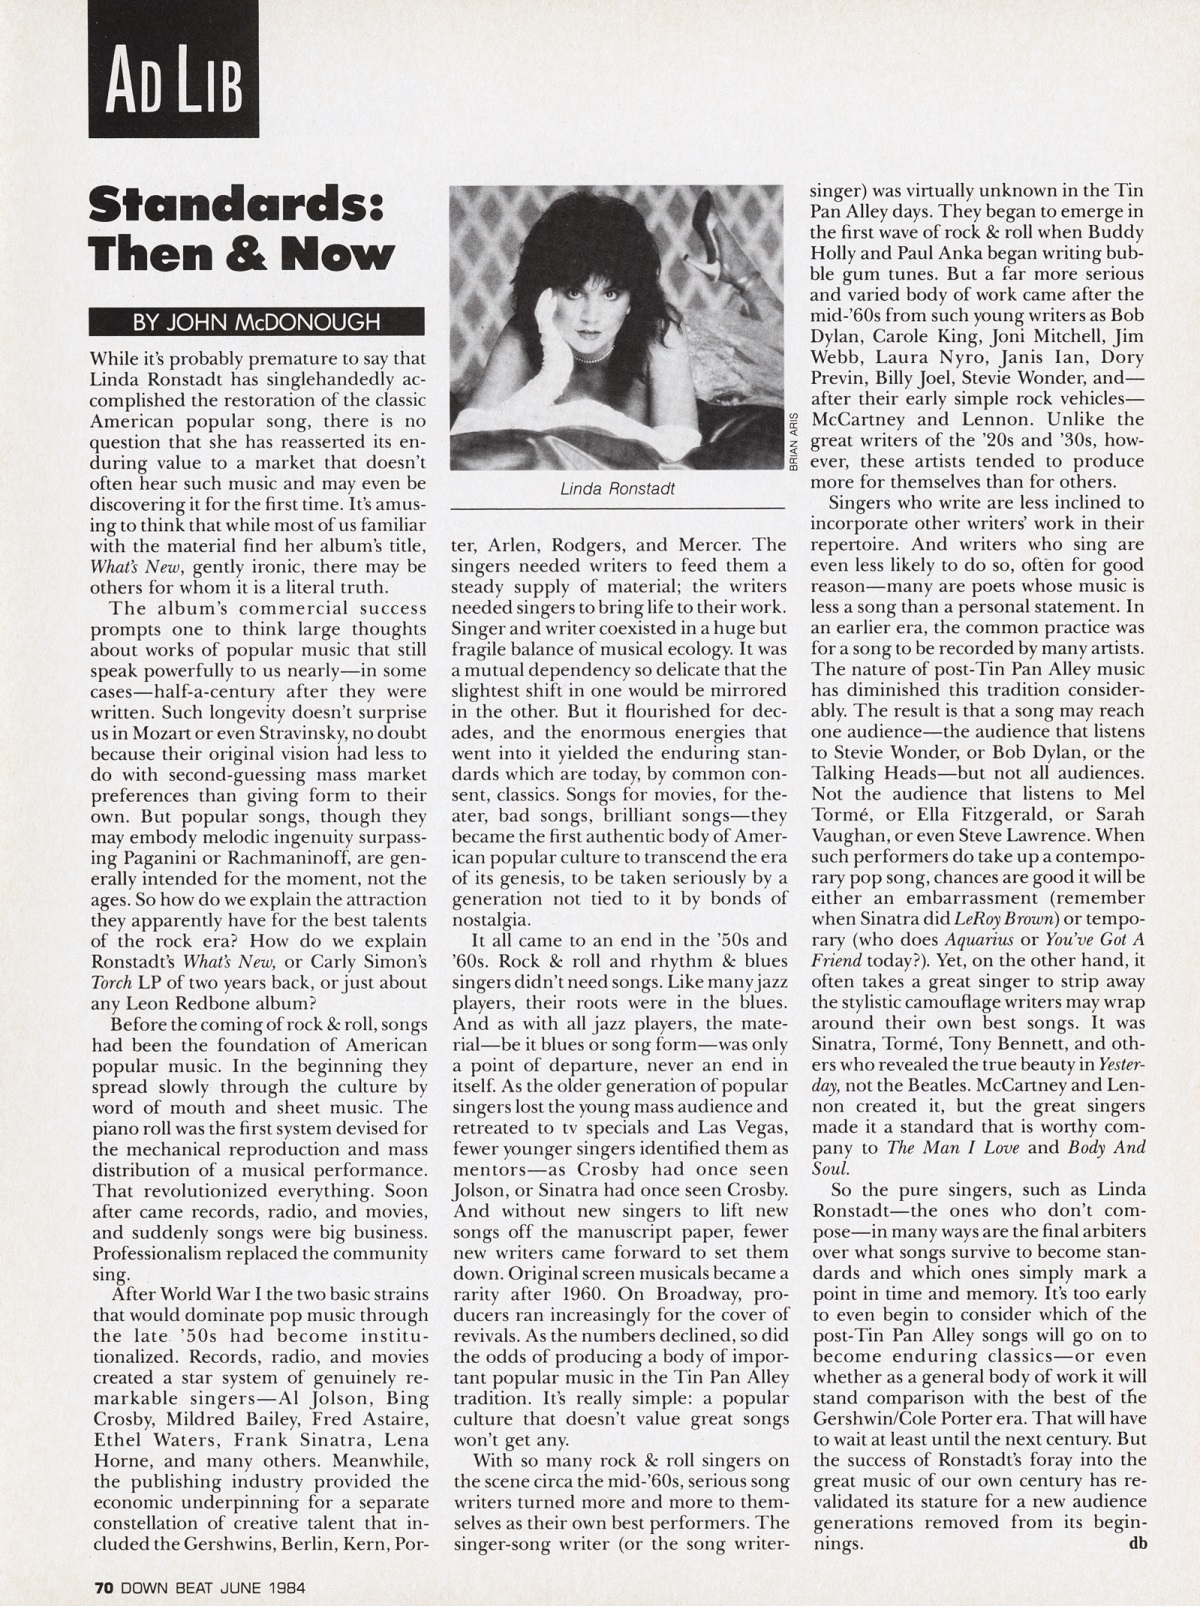 Downbeat Magazine June 1984 Linda Ronstadt